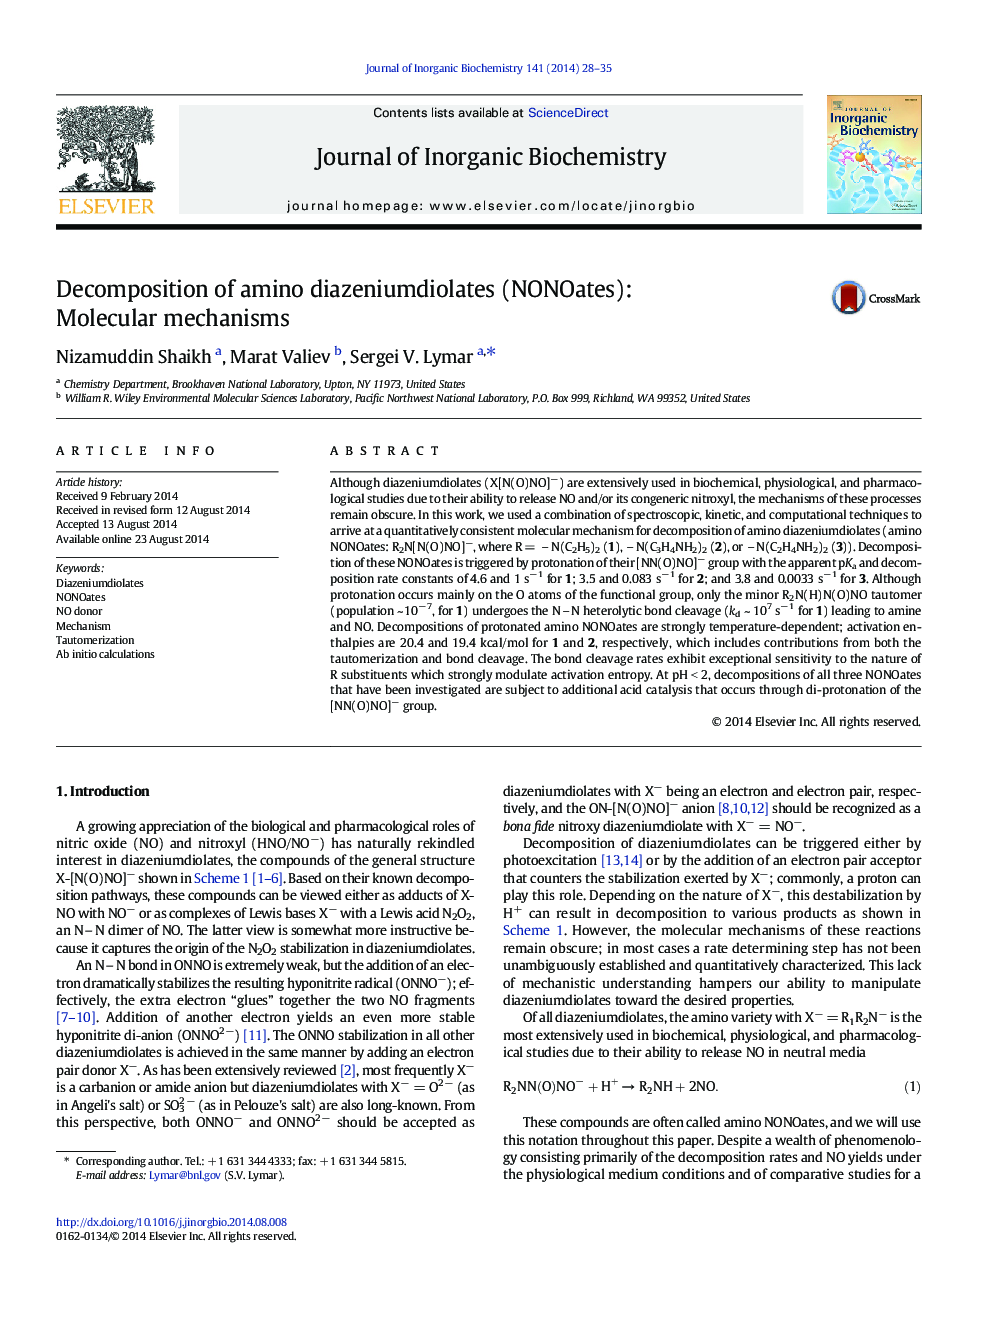 Decomposition of amino diazeniumdiolates (NONOates): Molecular mechanisms